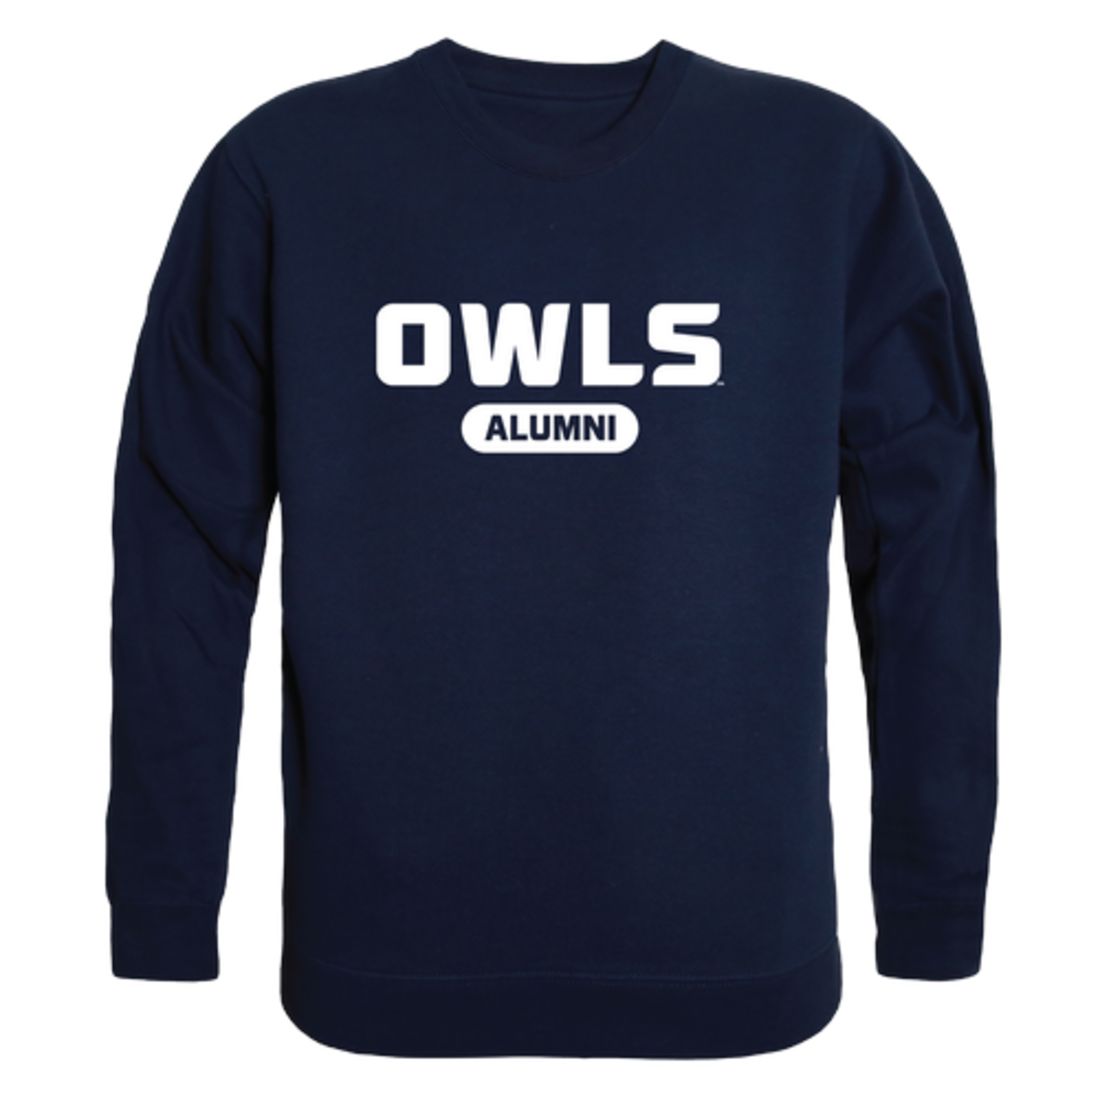 Mississippi University for Women The W Owls Alumni Crewneck Sweatshirt